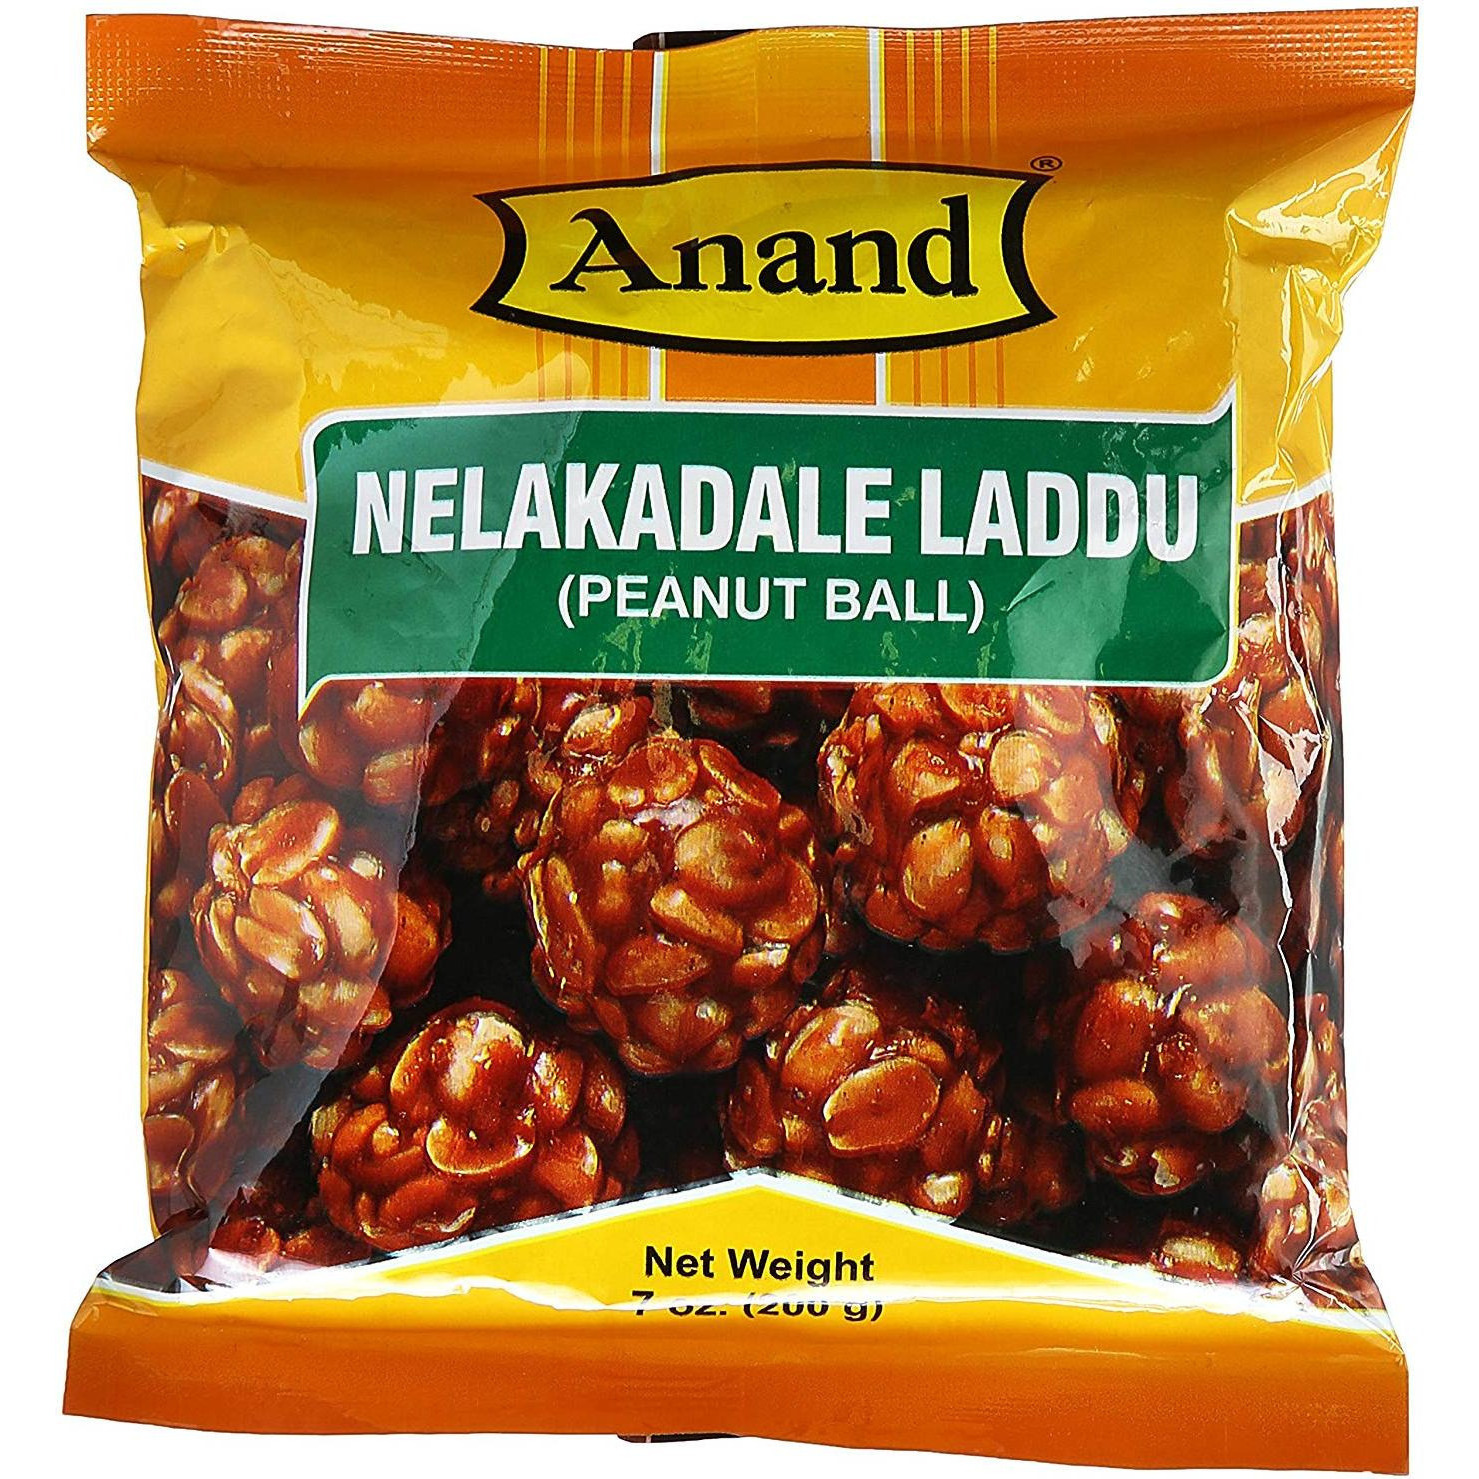 Pack of 3 - Anand Nelakadale Laddu Peanut Ball - 200 Gm (7 Oz)